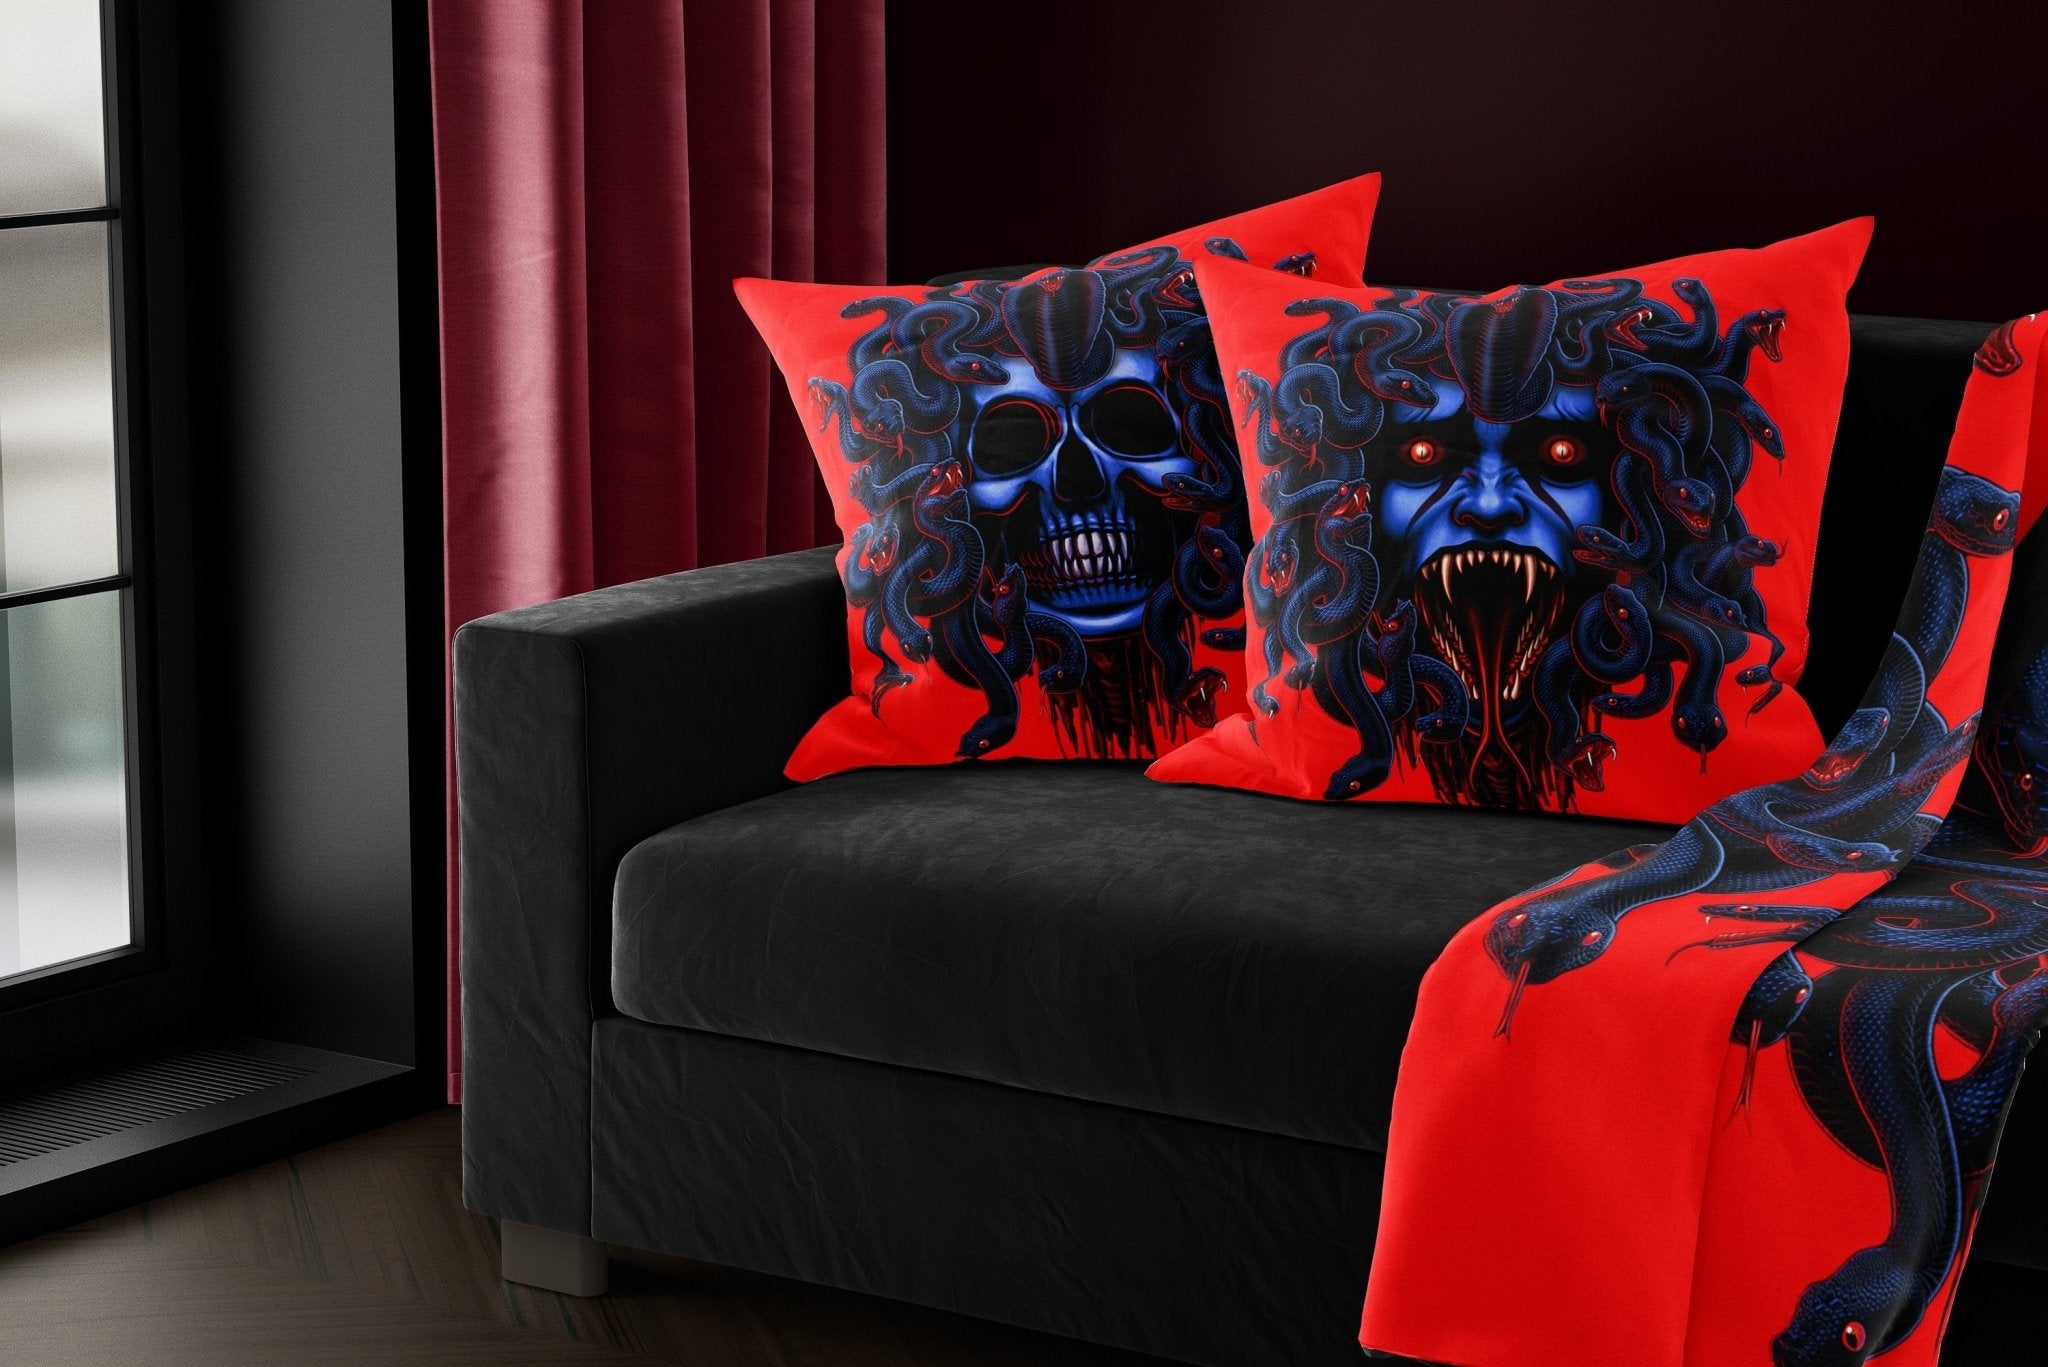 Horror Throw Pillow, Decorative Accent Cushion, Gothic Neon Room Decor, Macabre Art, Alternative Home - Black Medusa Skull & Snakes - Abysm Internal